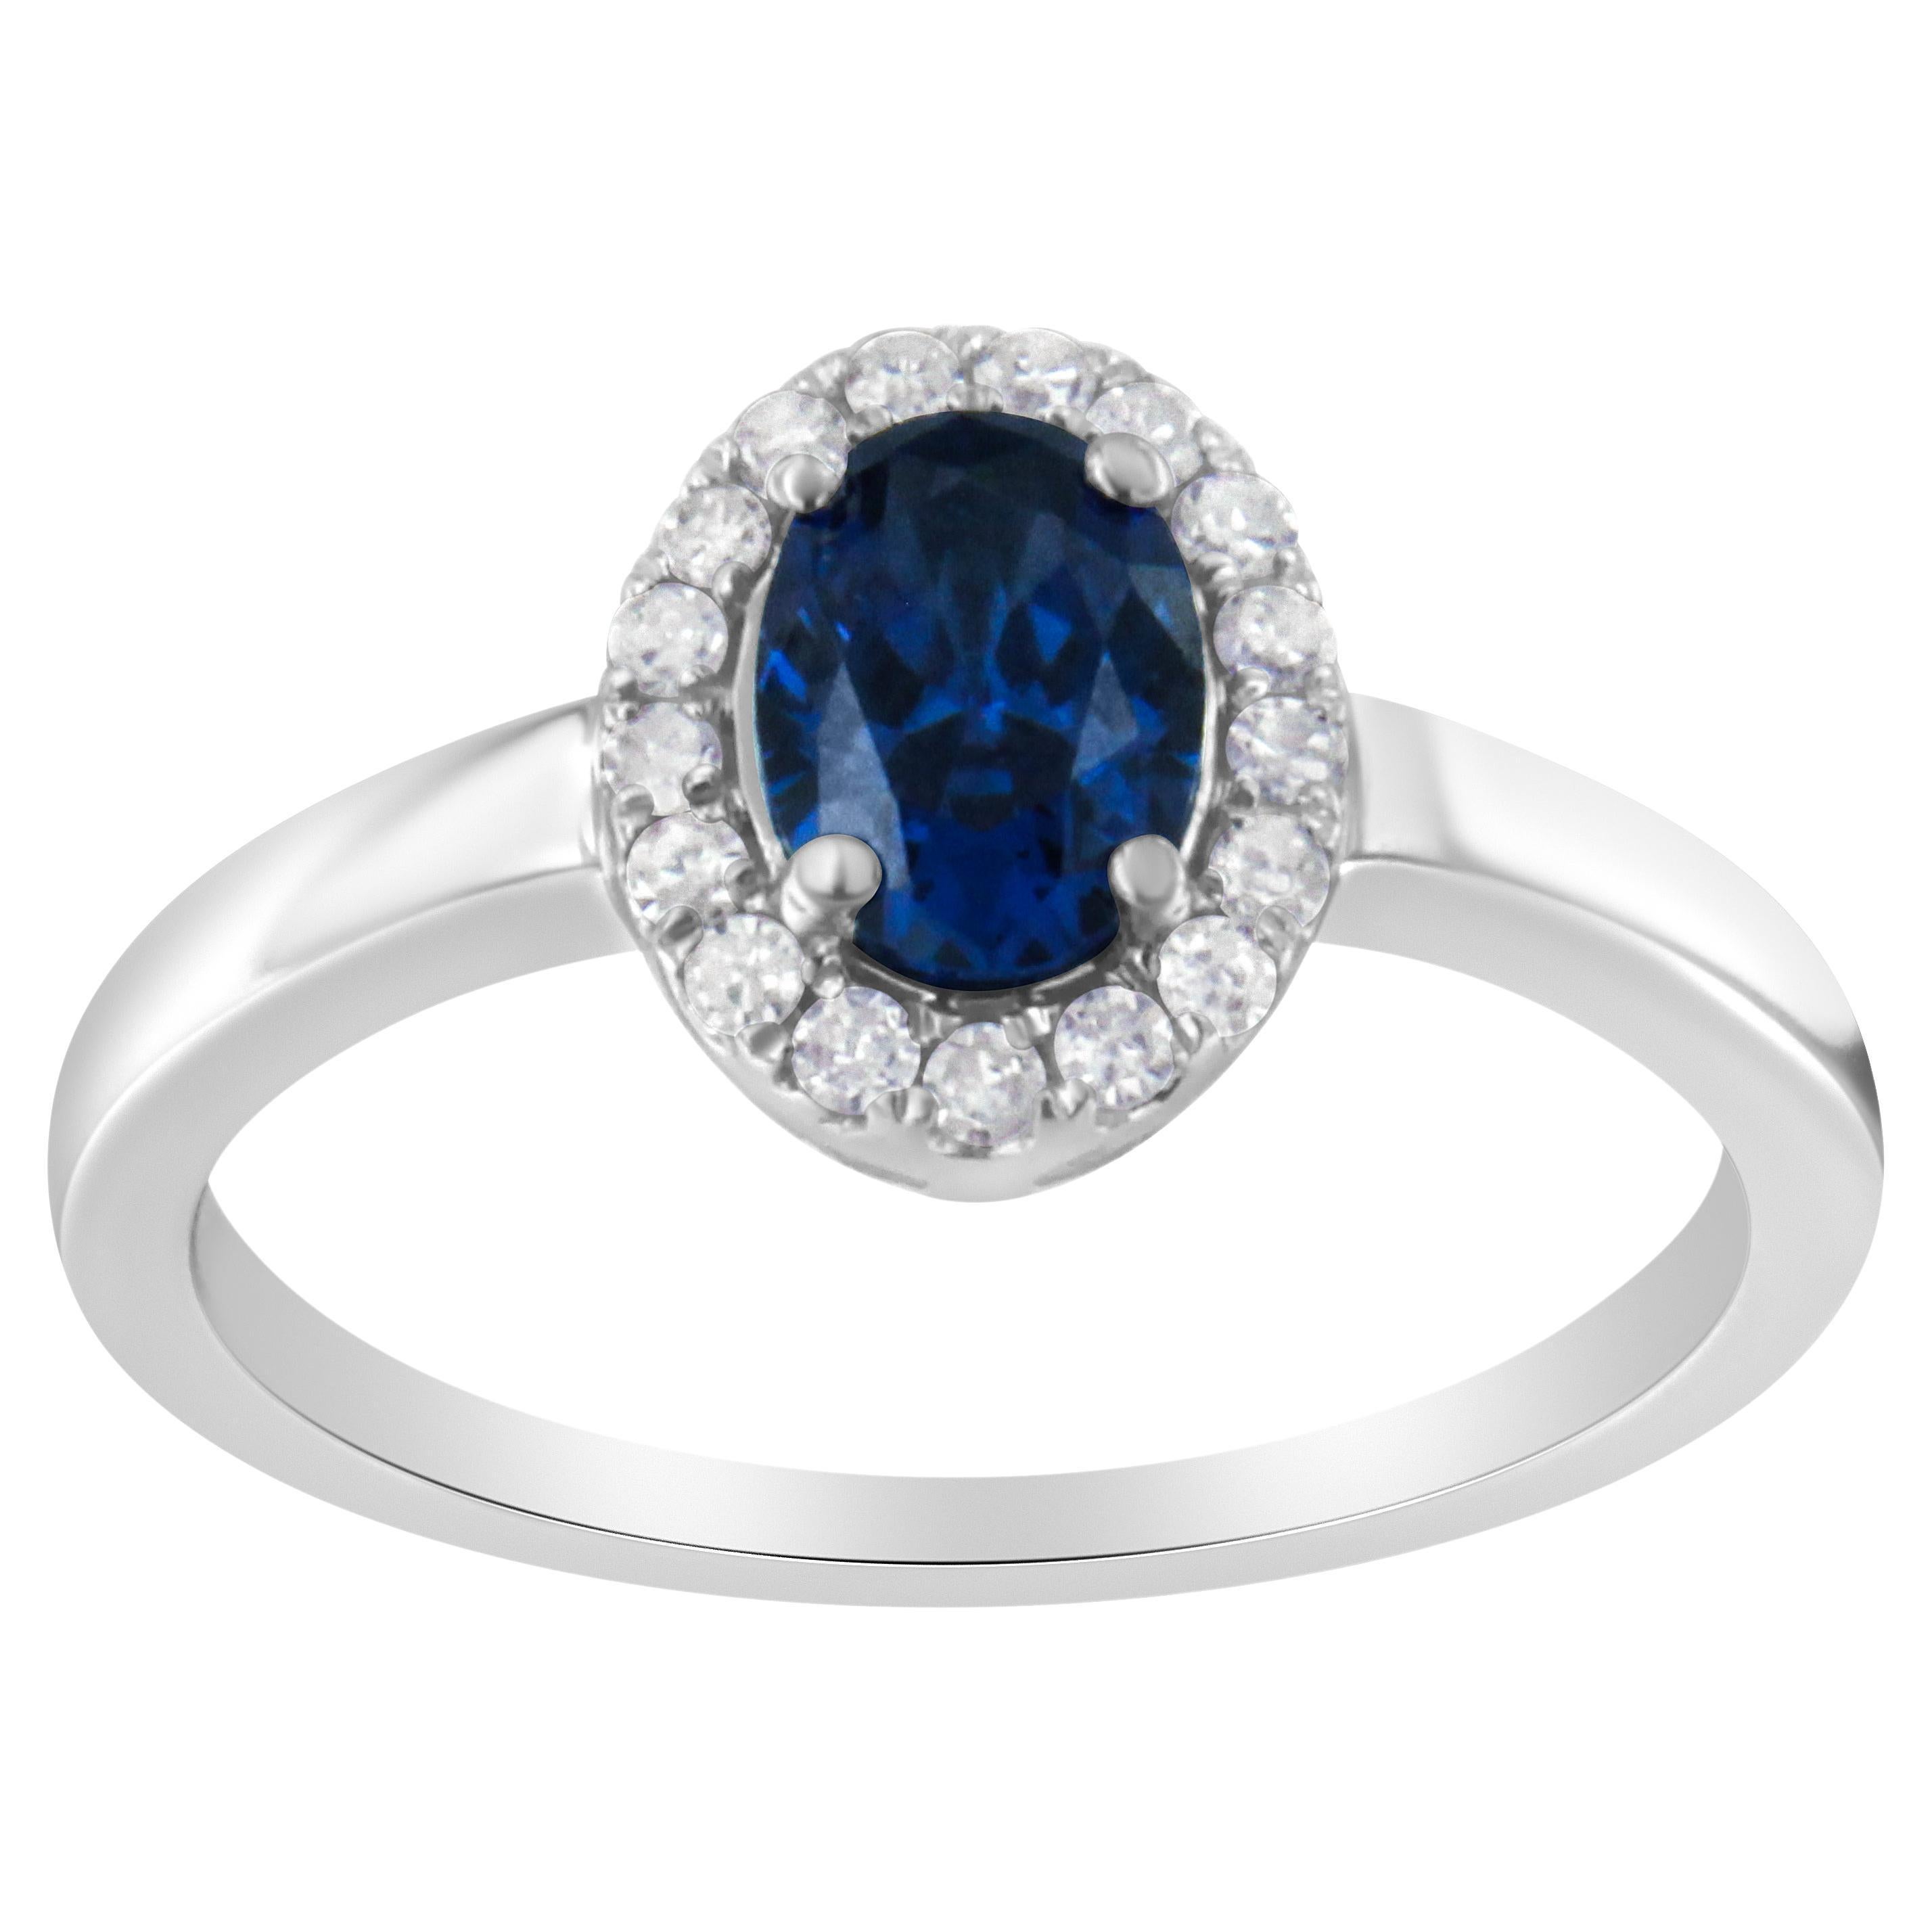 10K White Gold 1/5 Carat Round Diamond & Blue Sapphire Halo Cocktail Ring